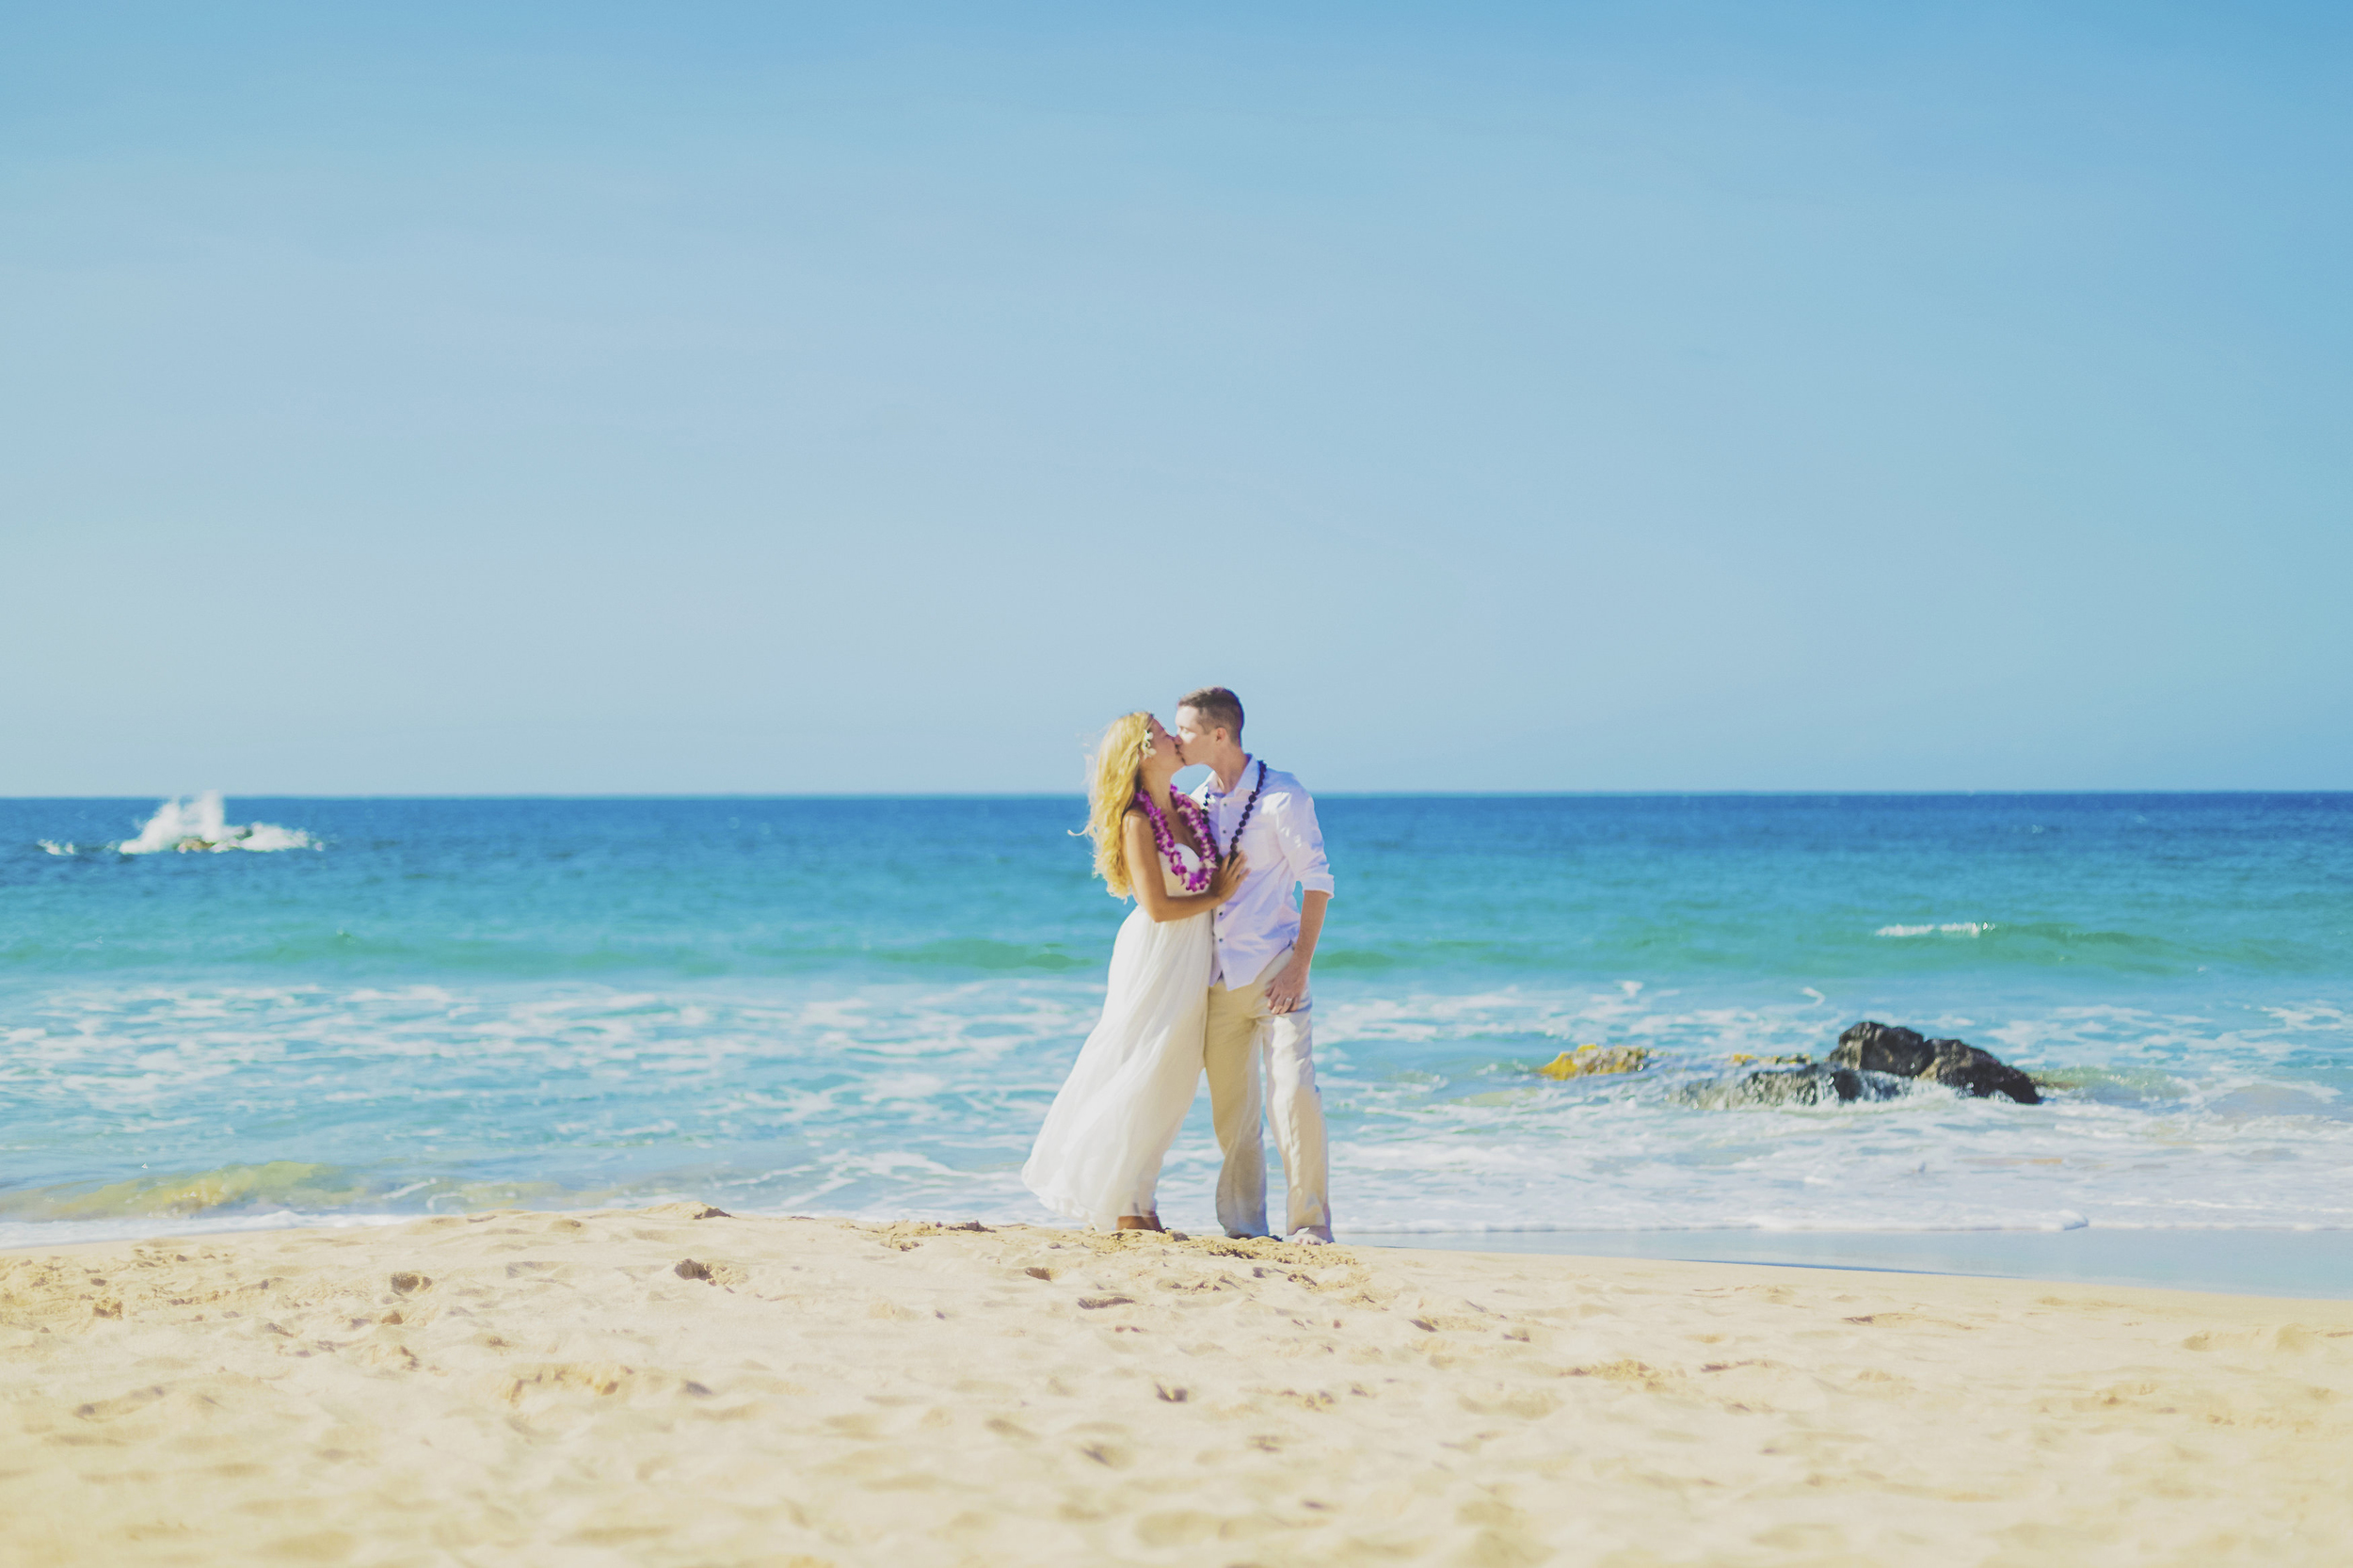 angie-diaz-photography-maui-honeymoon-hawaii-elopement-6.jpg